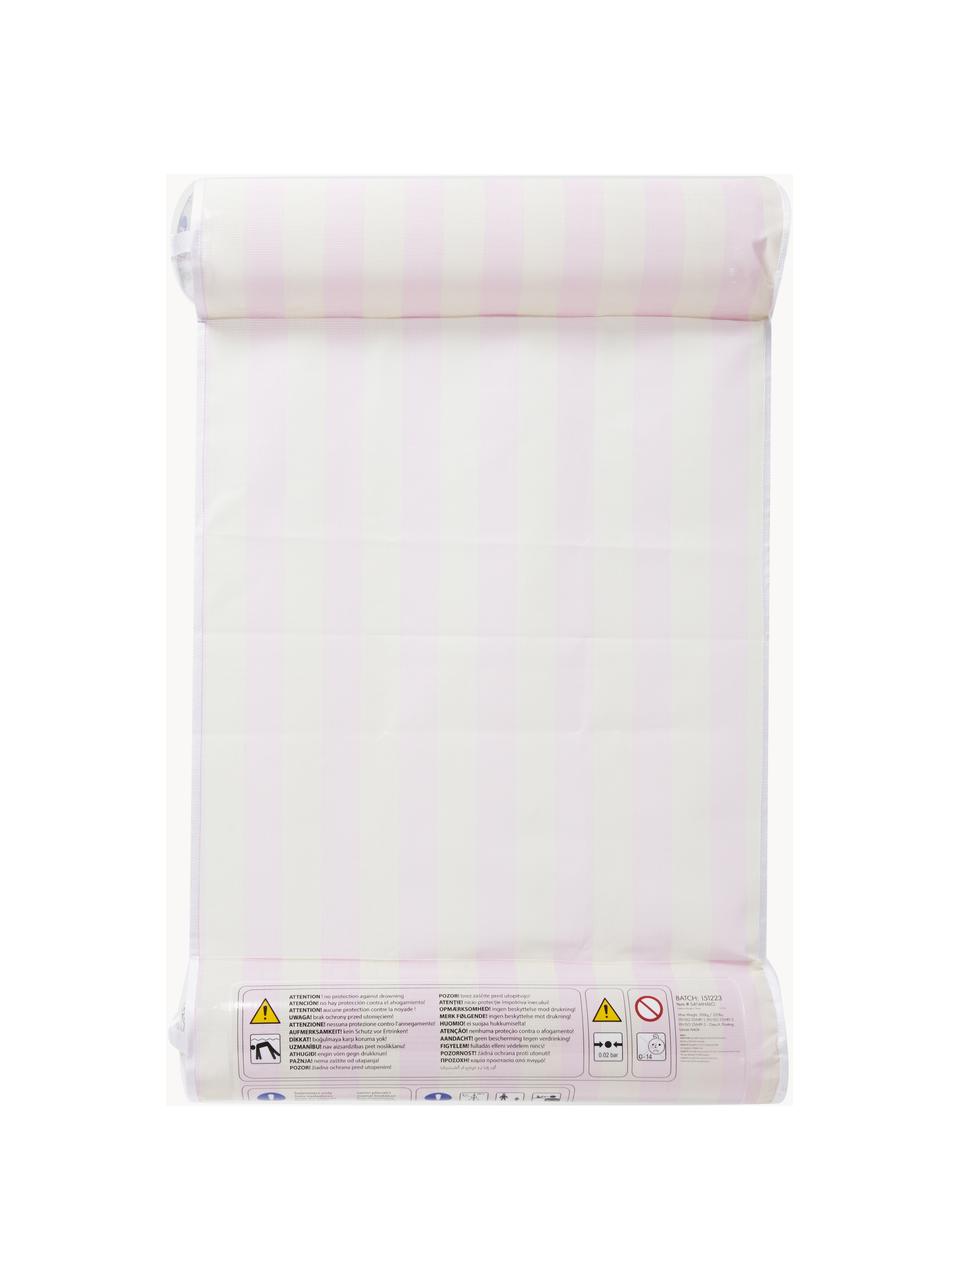 Colchoneta hinchable Bubblegum, 60% tela, 40% plástico, Rosa palo, Cama 90 cm (155 x 220 cm)